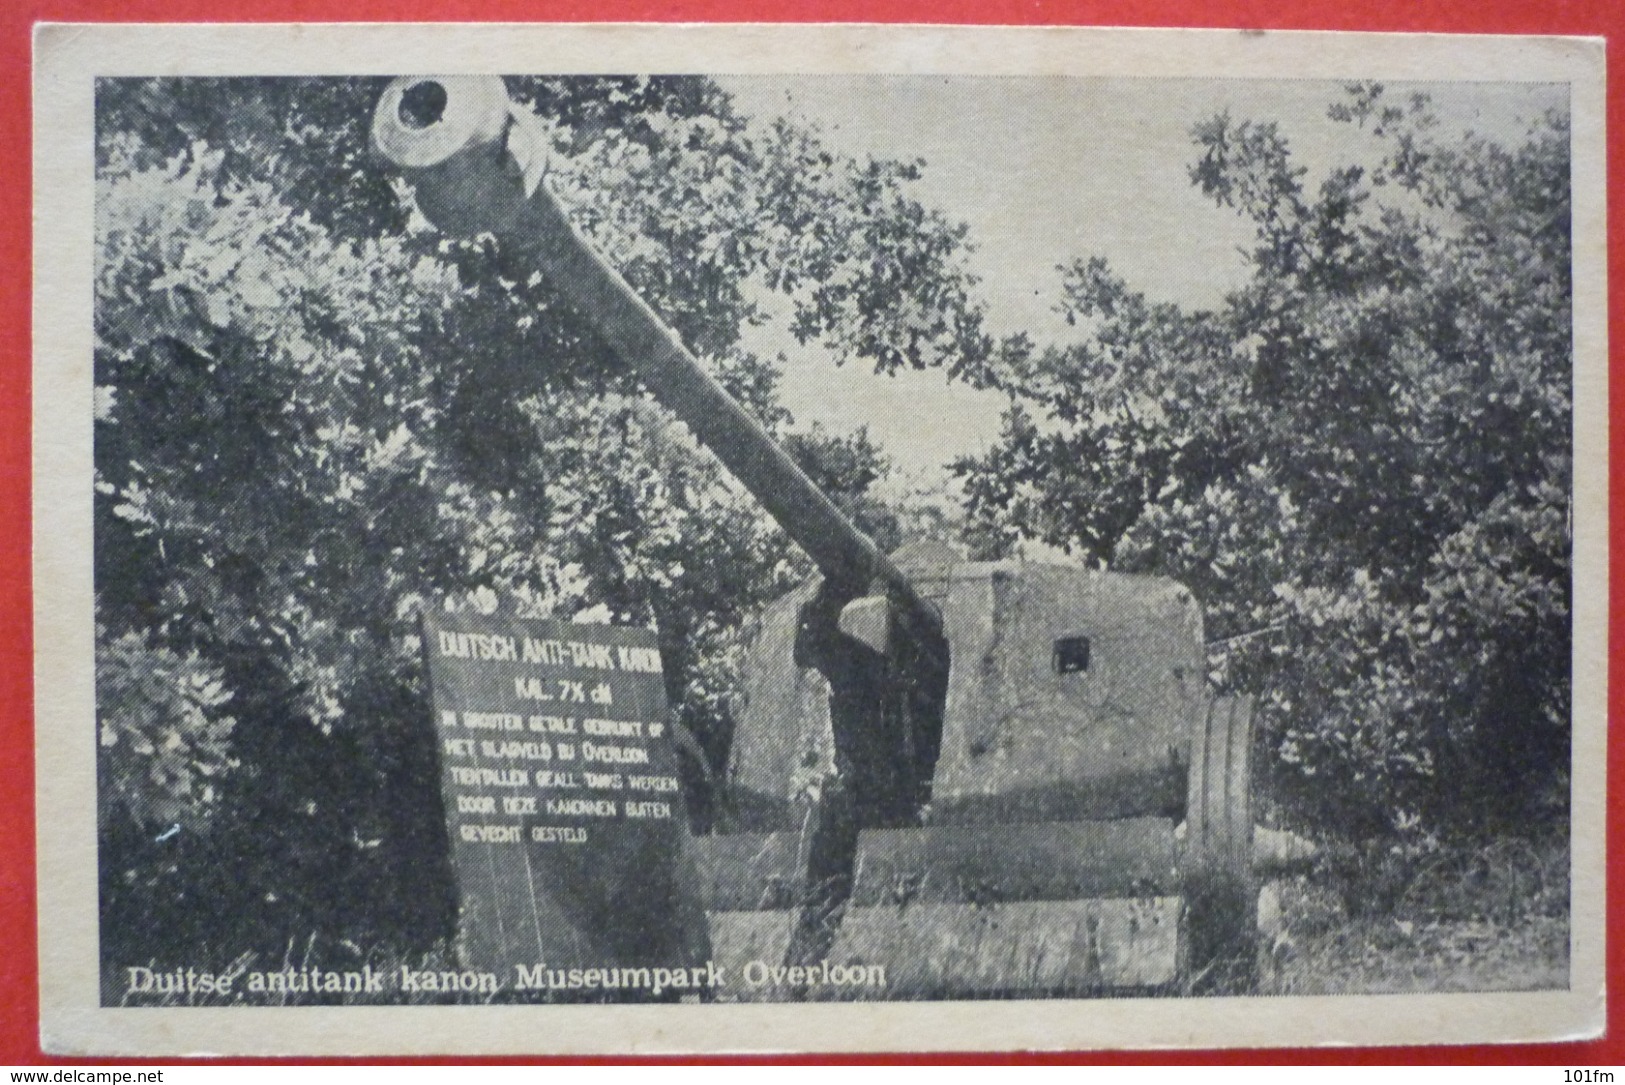 DUITSE ANTITANK KANON MUSEUMPARK OVERLOON - W.W. II. - War Memorials